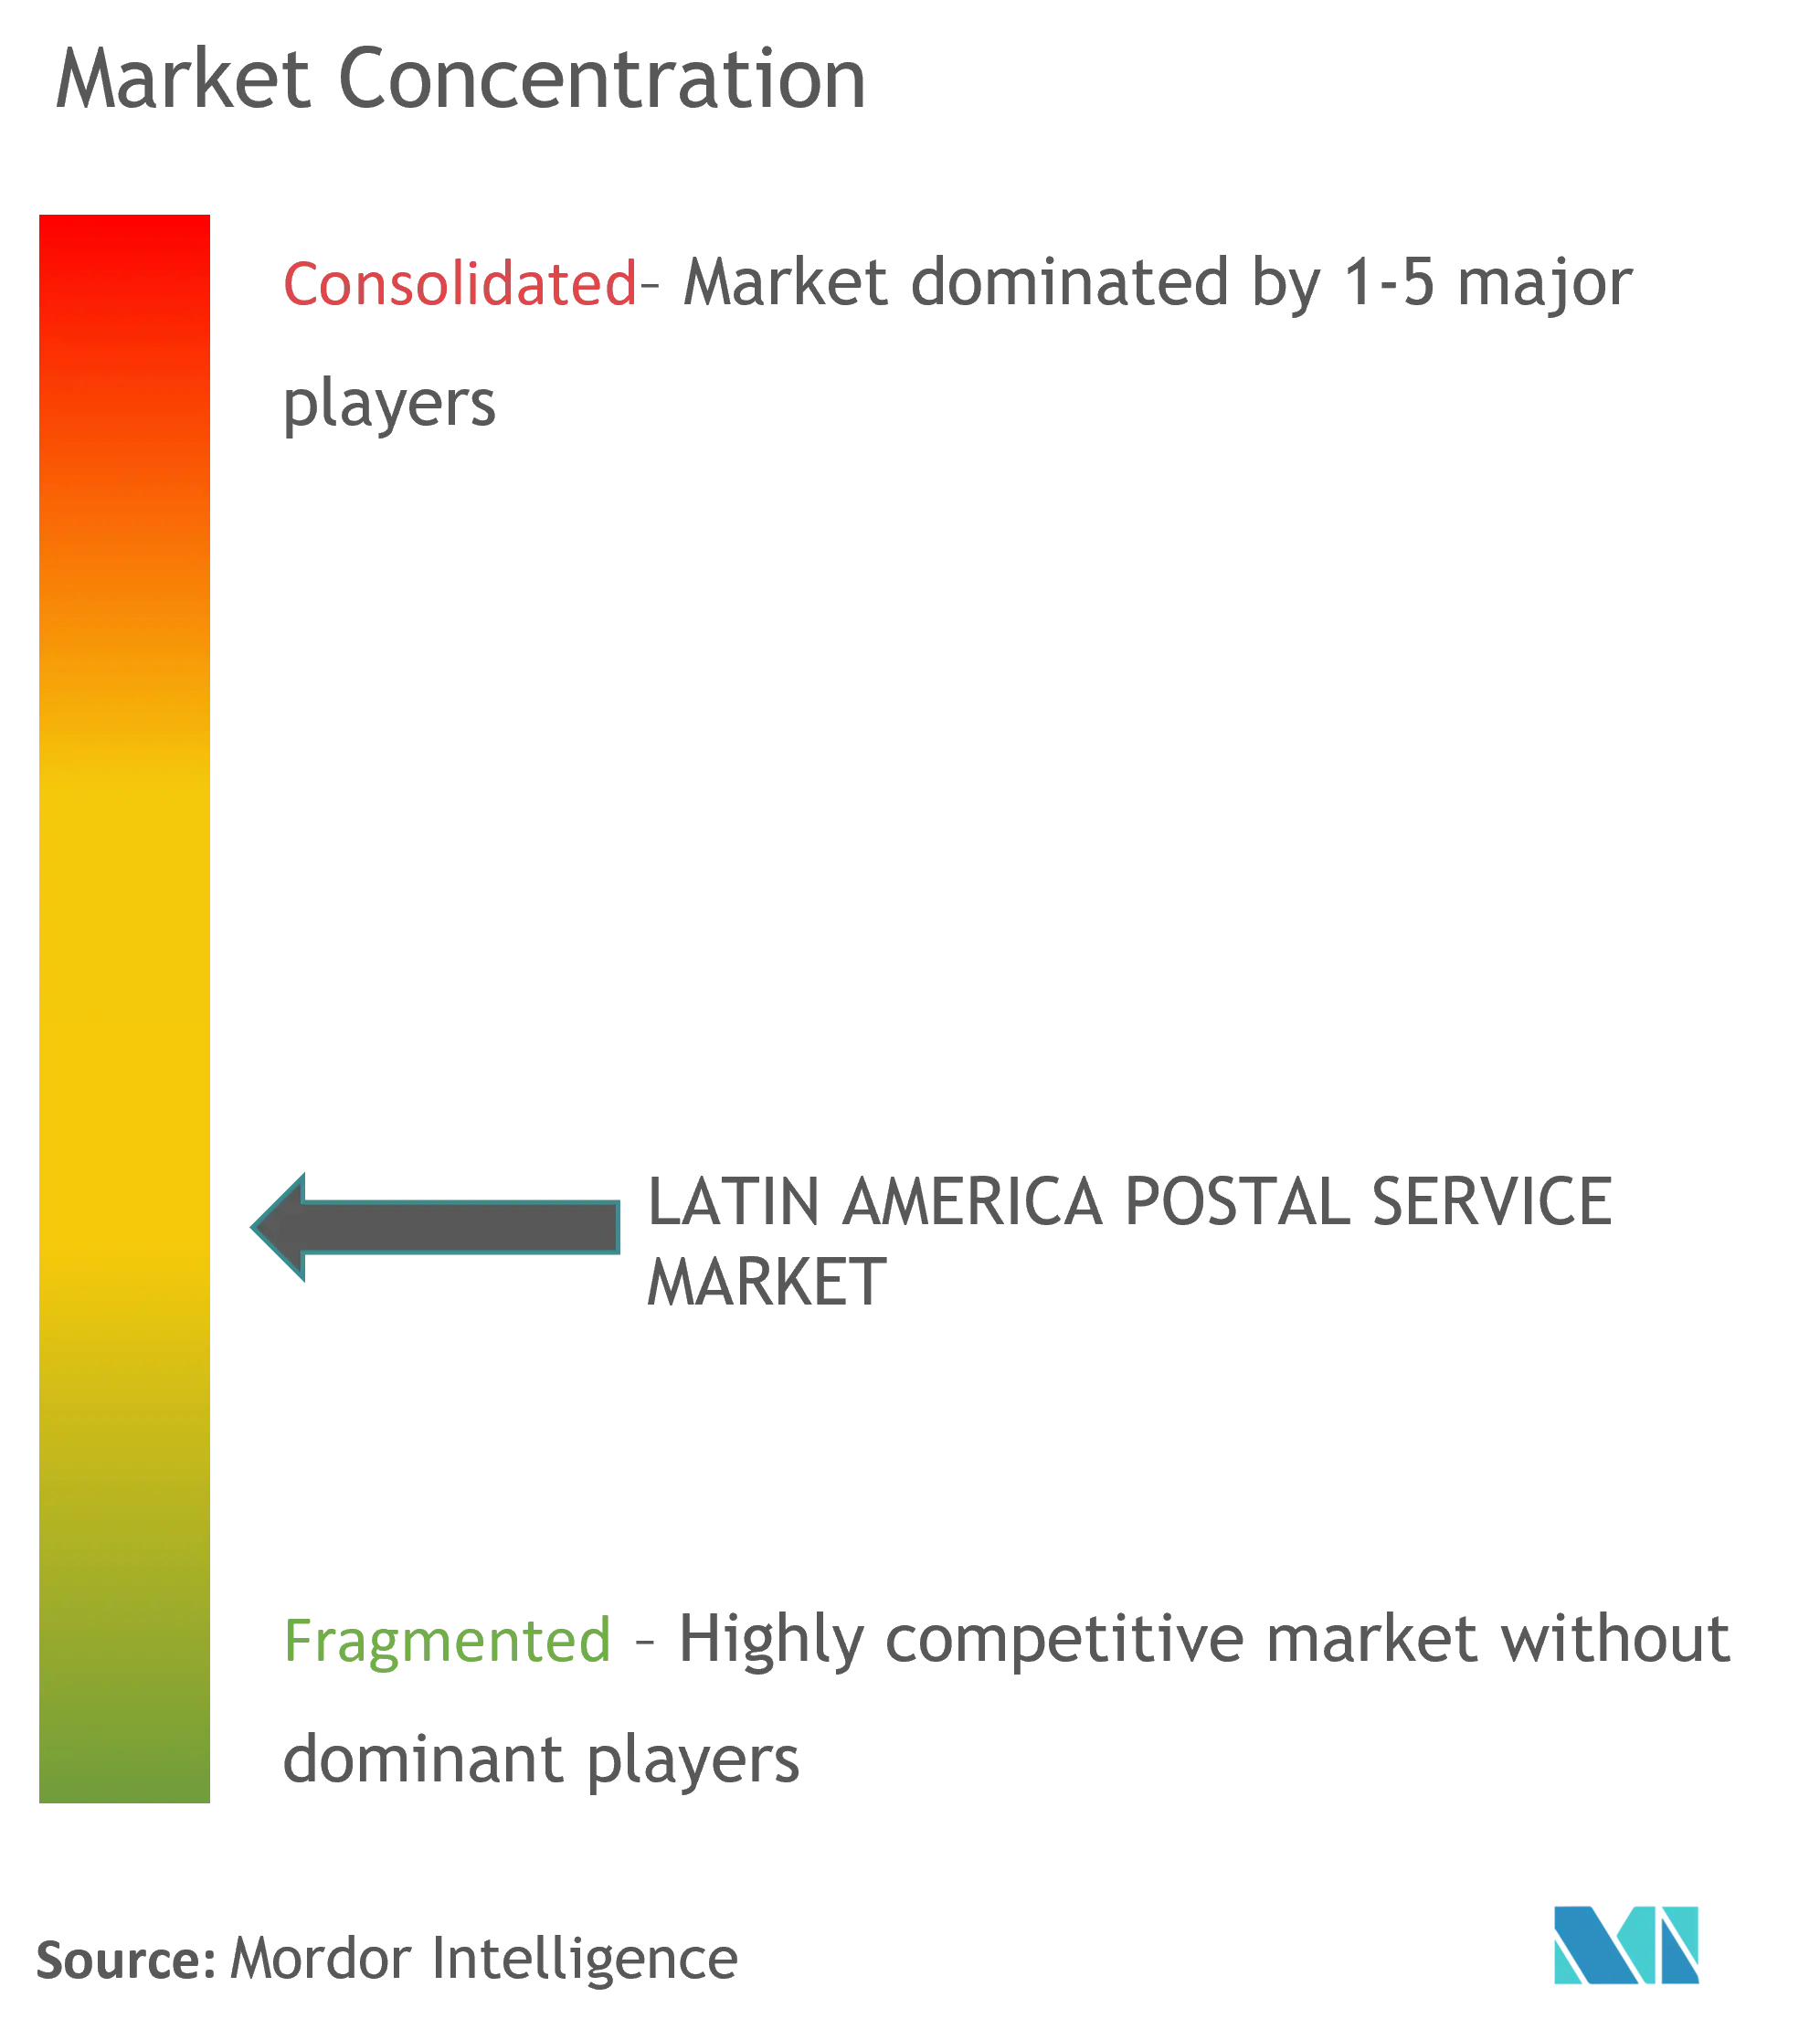 Latin America Postal Service Market Concentration